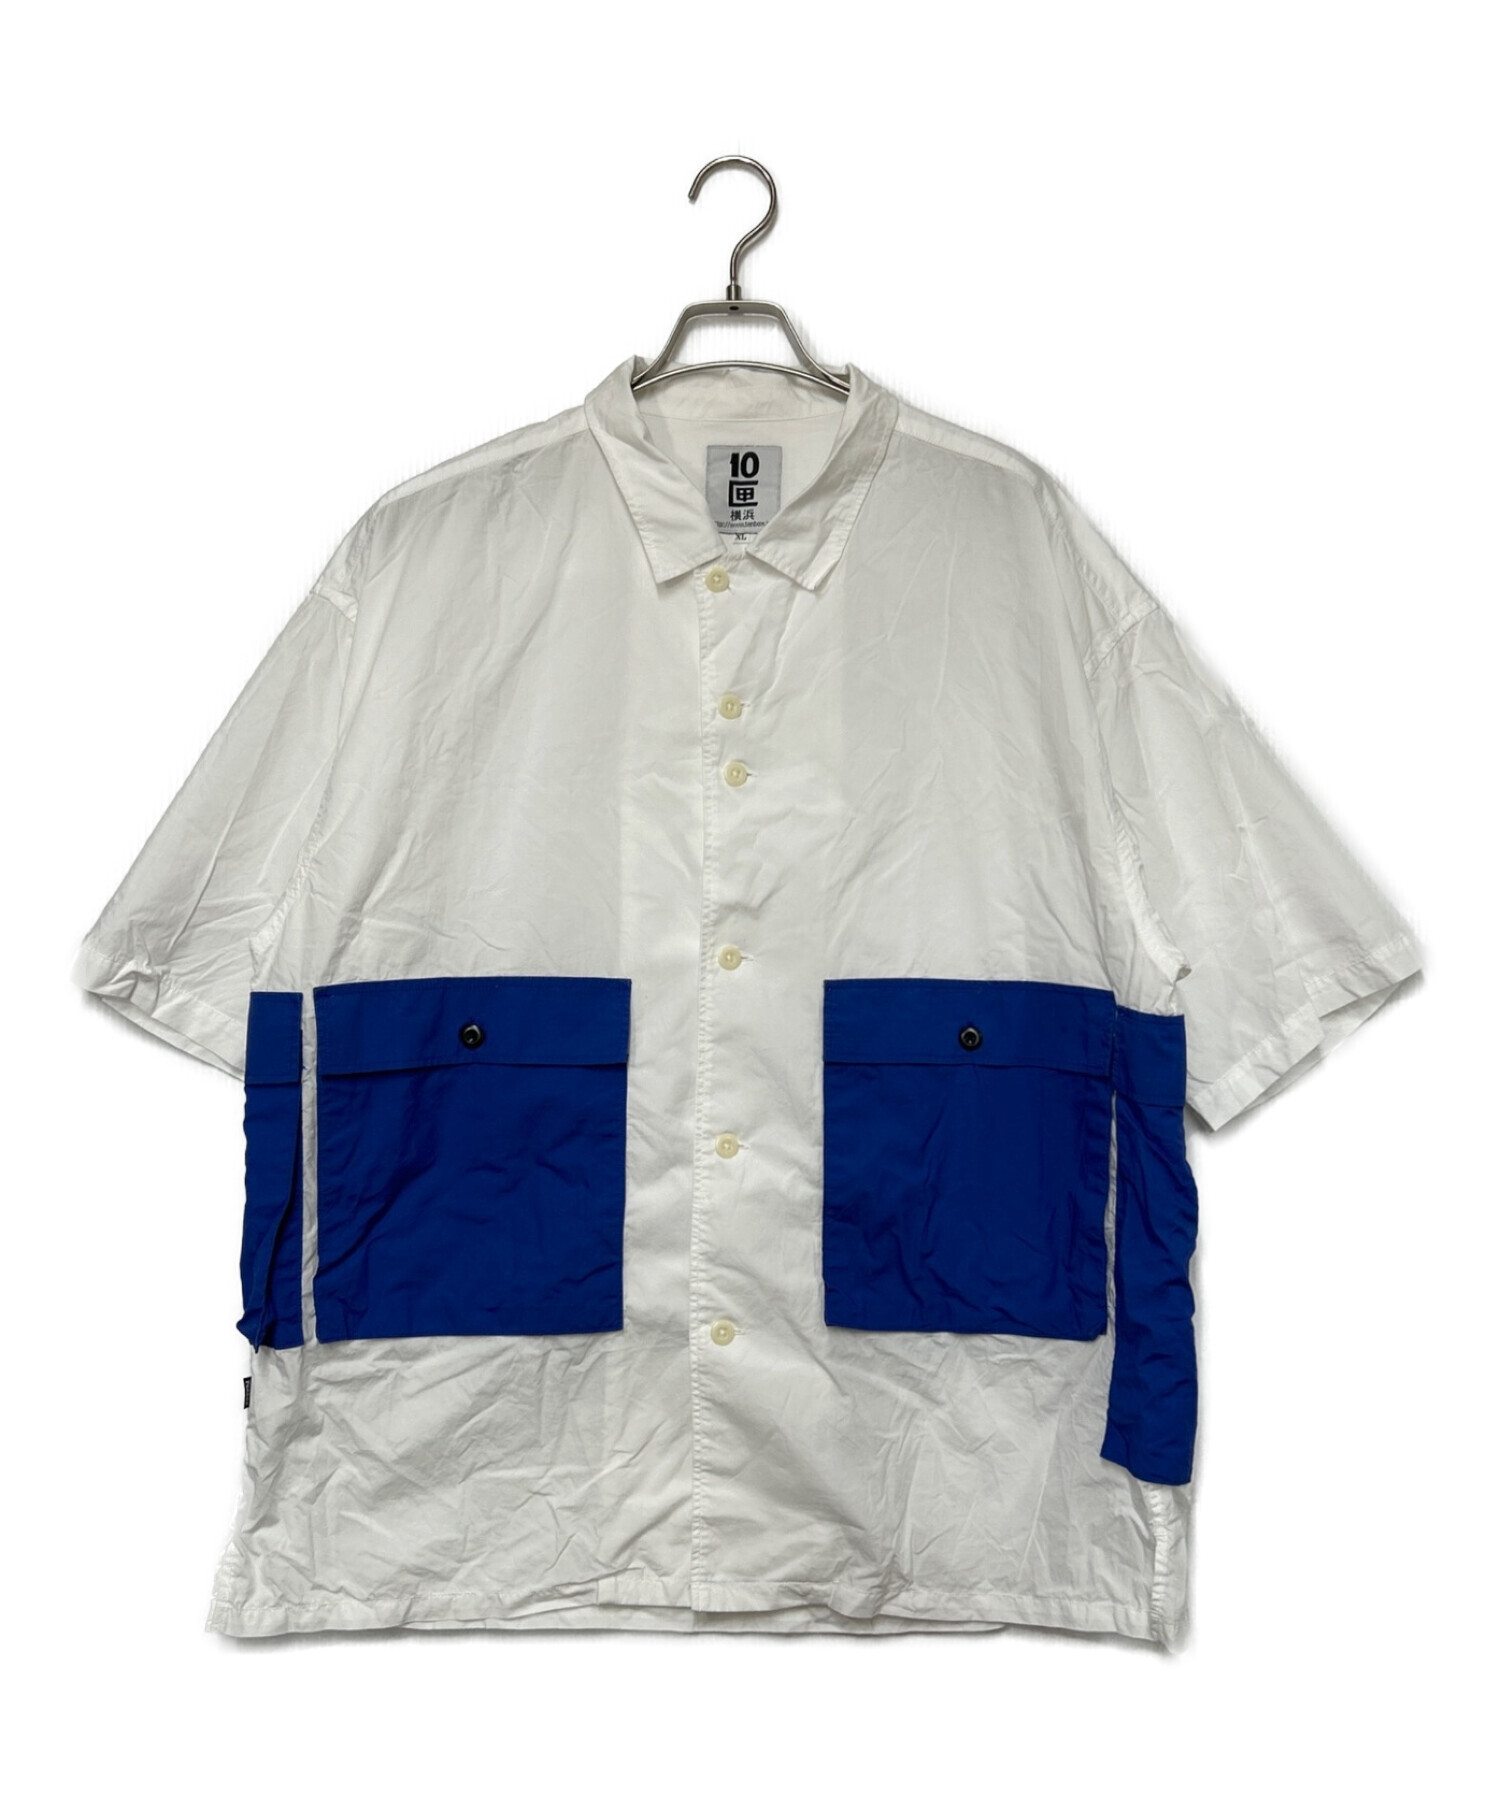 TENBOX (テンボックス) ドラッグディーラーシャツ ホワイト×ブルー サイズ:size XL